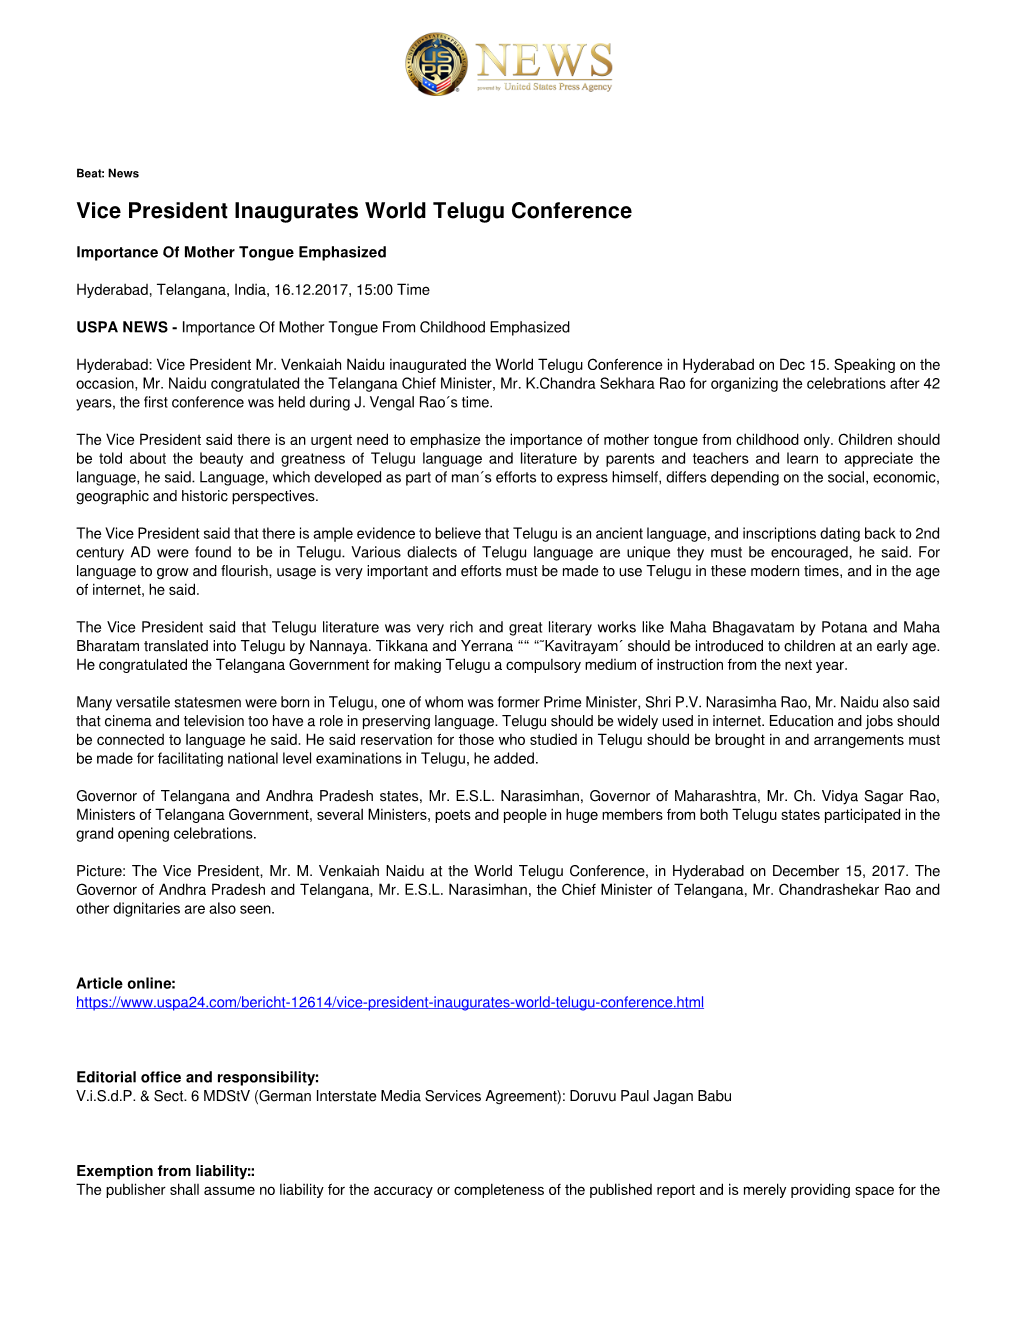 Vice President Inaugurates World Telugu Conference